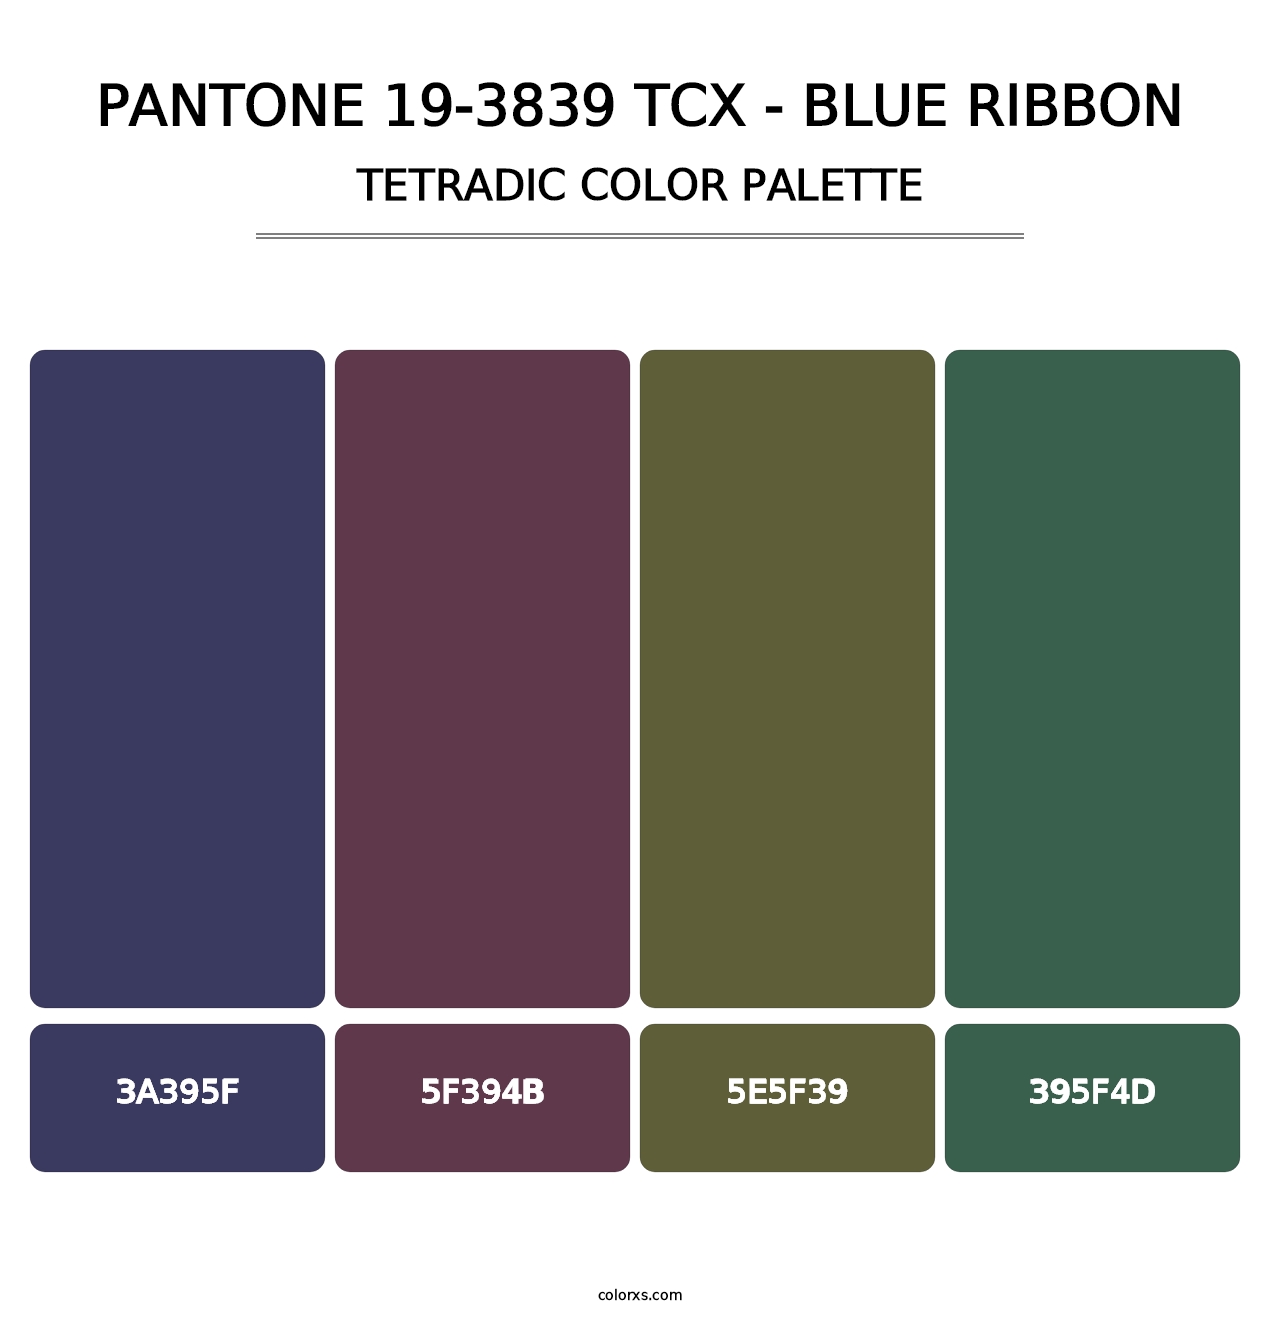 PANTONE 19-3839 TCX - Blue Ribbon - Tetradic Color Palette